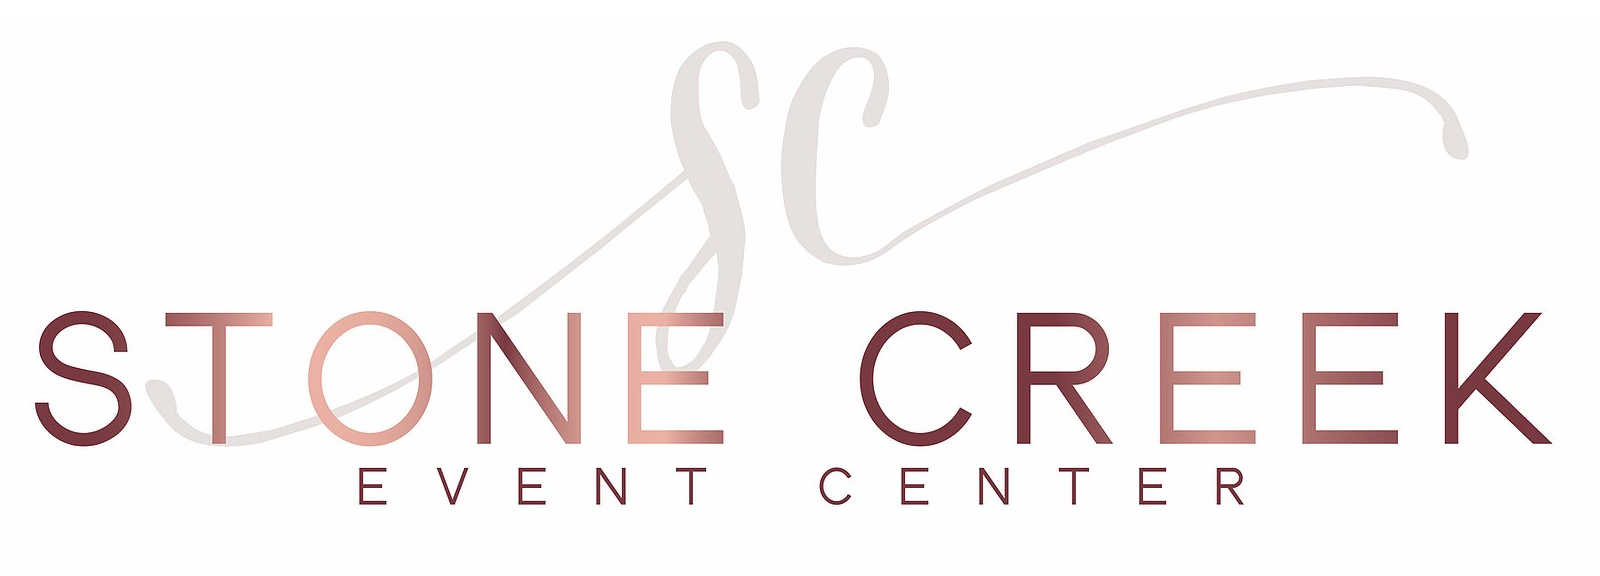 Stone Creek Event Center's Image